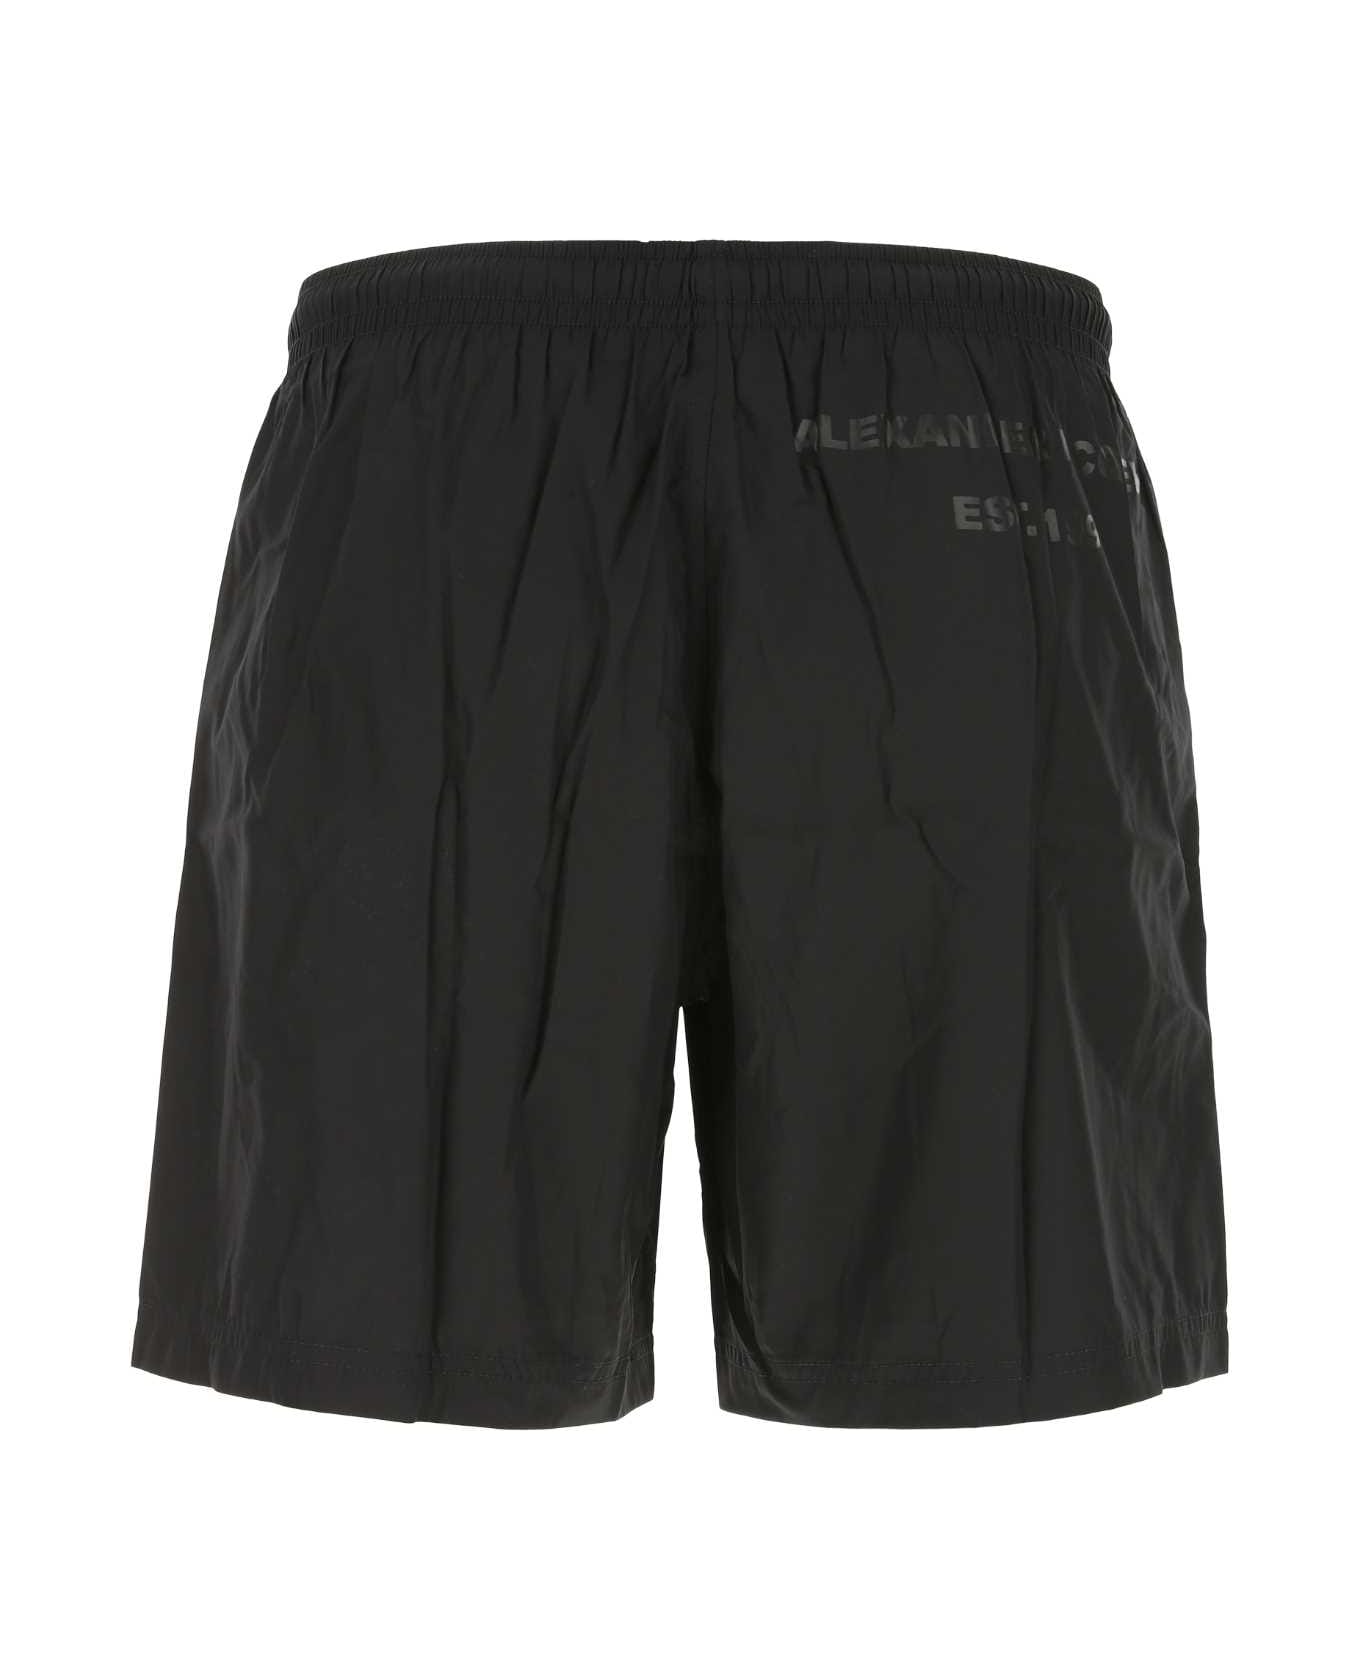 Alexander McQueen Black Nylon Swimming Shorts - 1060